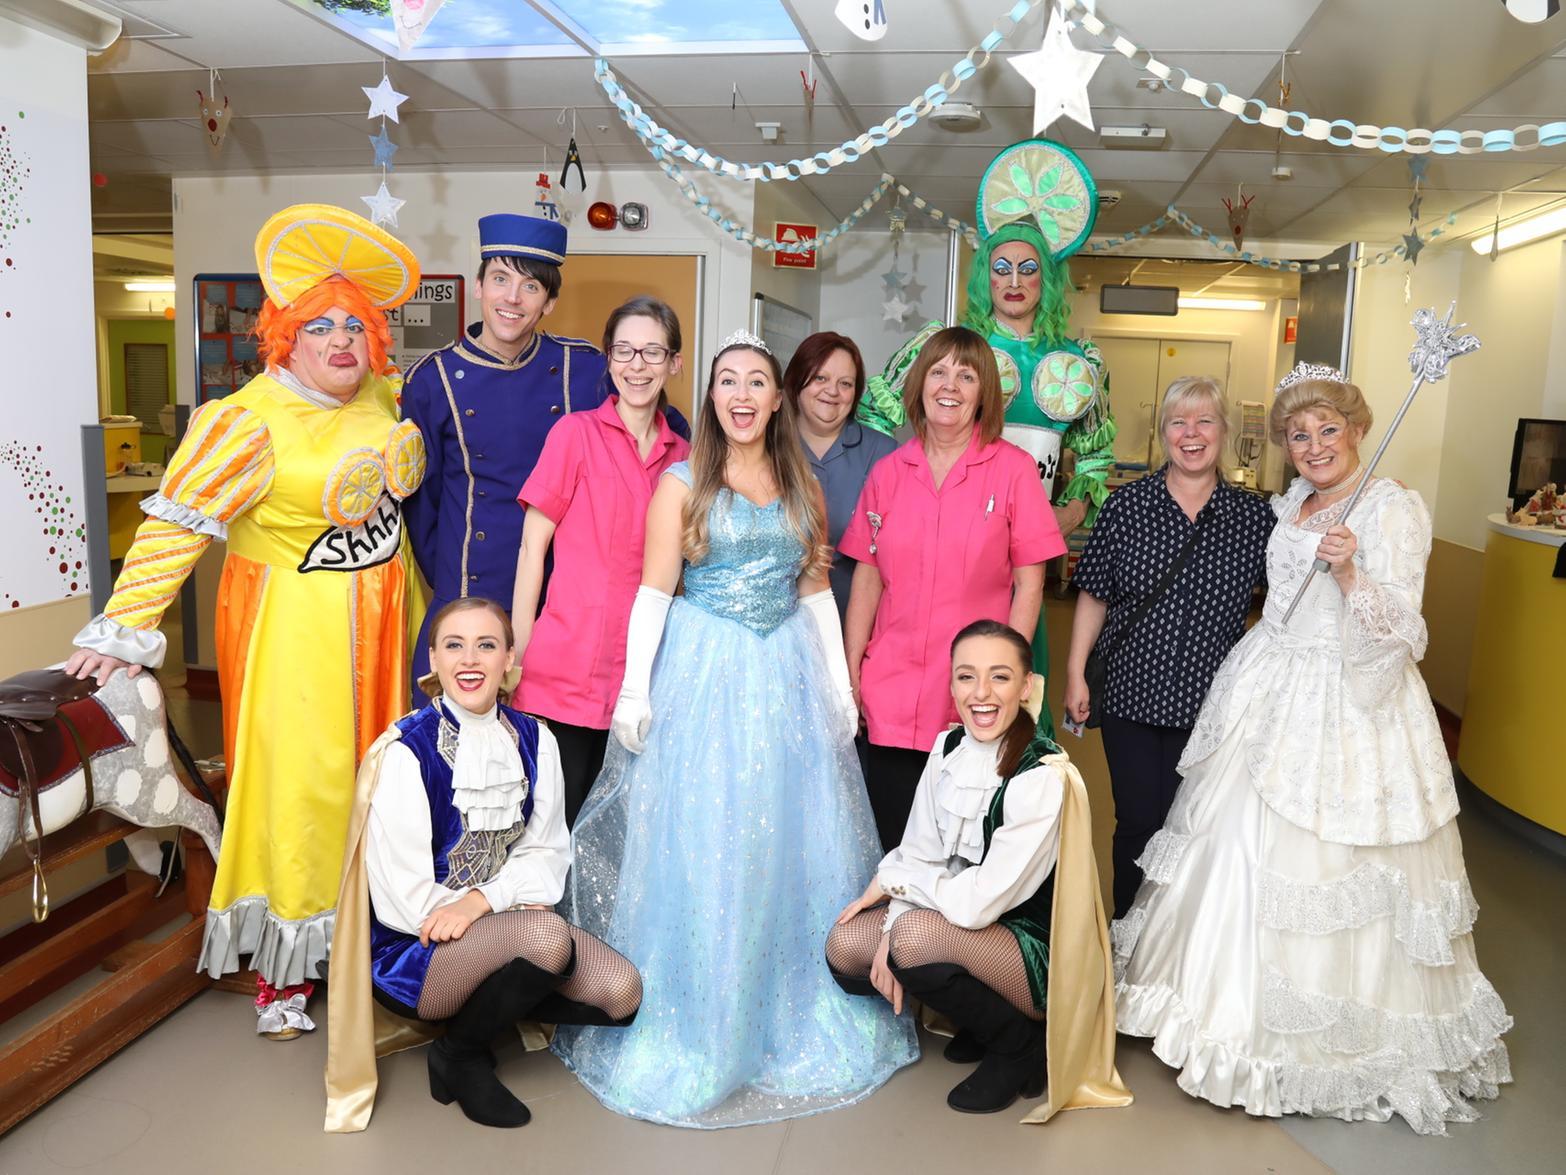 The cast were spreading joy around Skylark children's ward yesterday